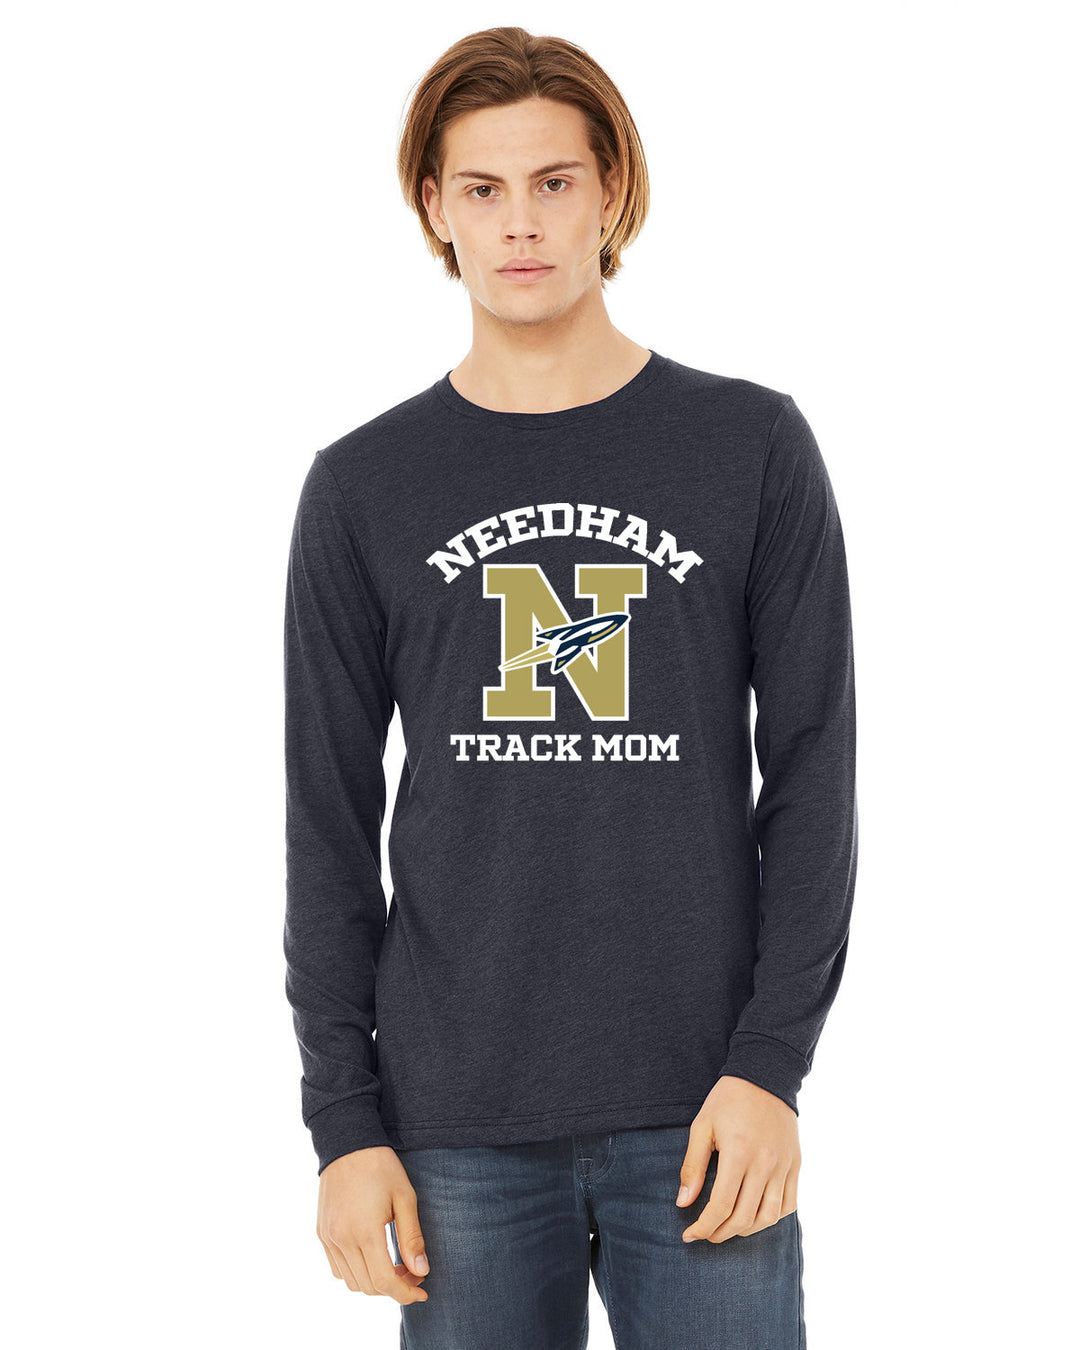 Needham "Track Mom" Jersey Long-Sleeve T-Shirt (3501CVC)